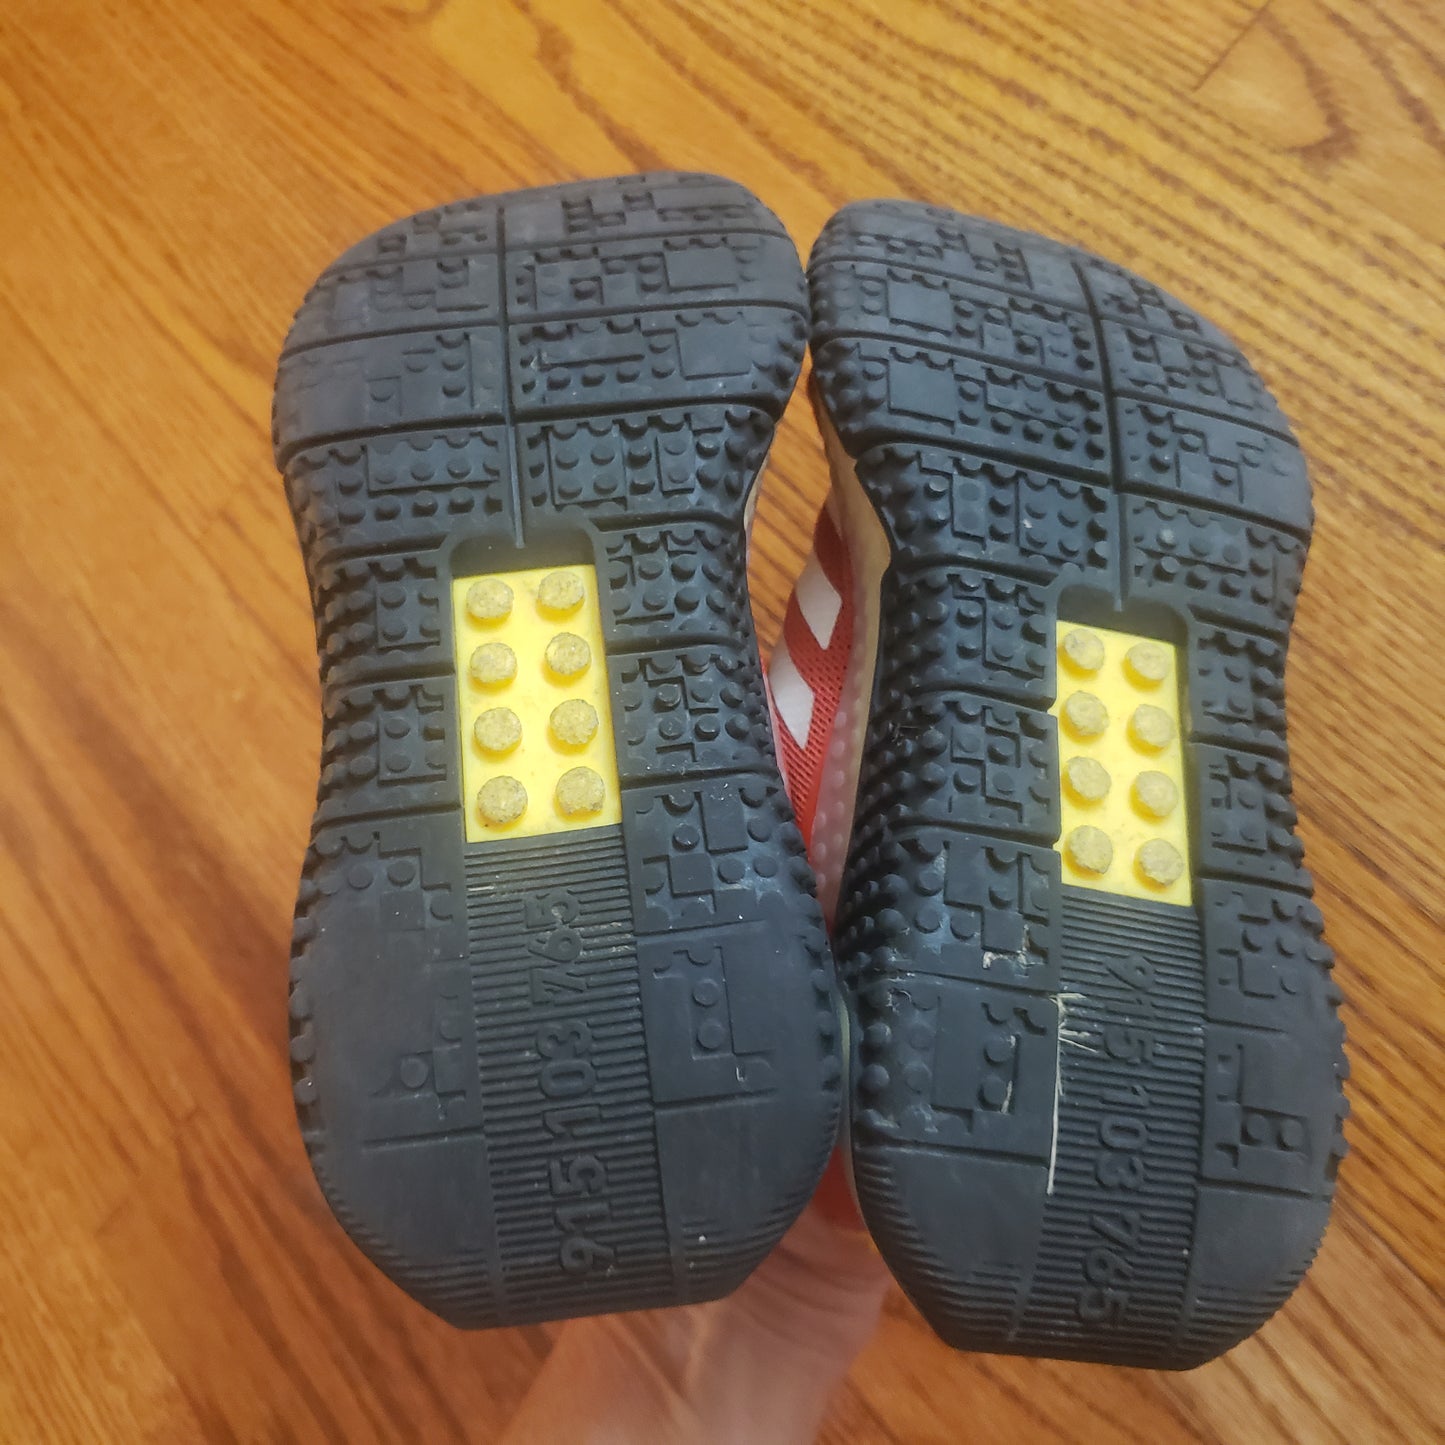 Adidas x Lego Running Gym Sneaker Shoes